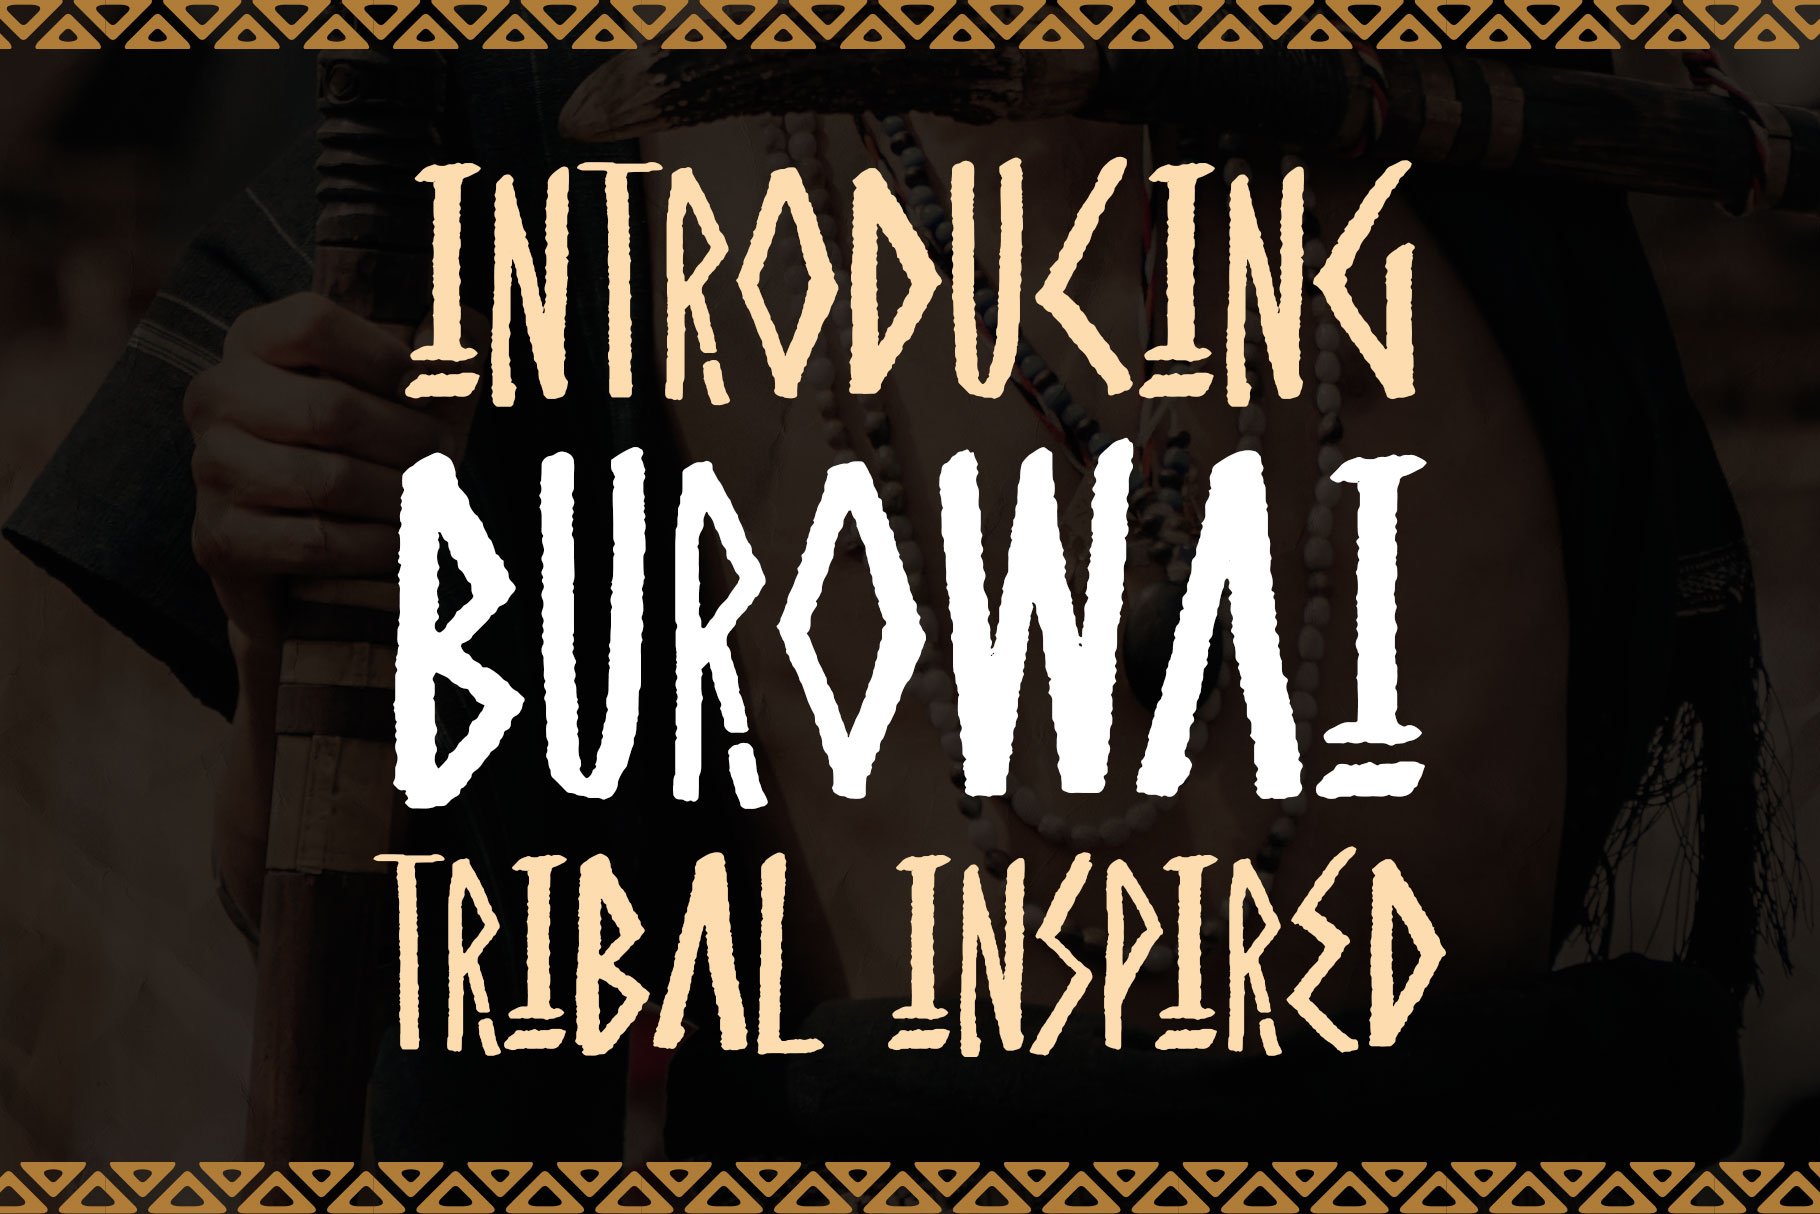 Burowai - Tribal Font cover image.